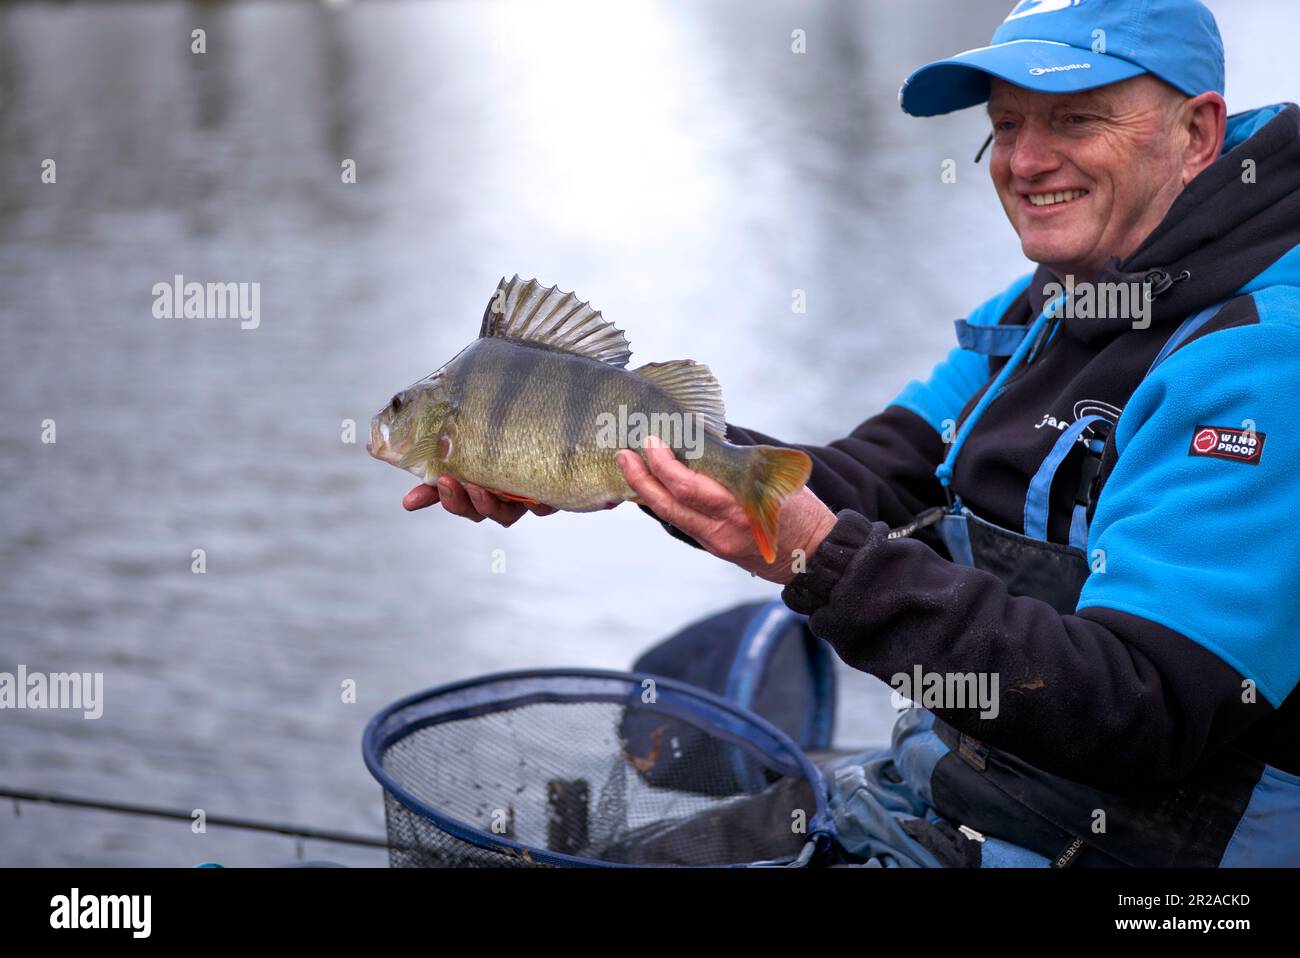 Fisherman displaying catch of a Perch fish, P. fluviatilis; England, UK Stock Photo